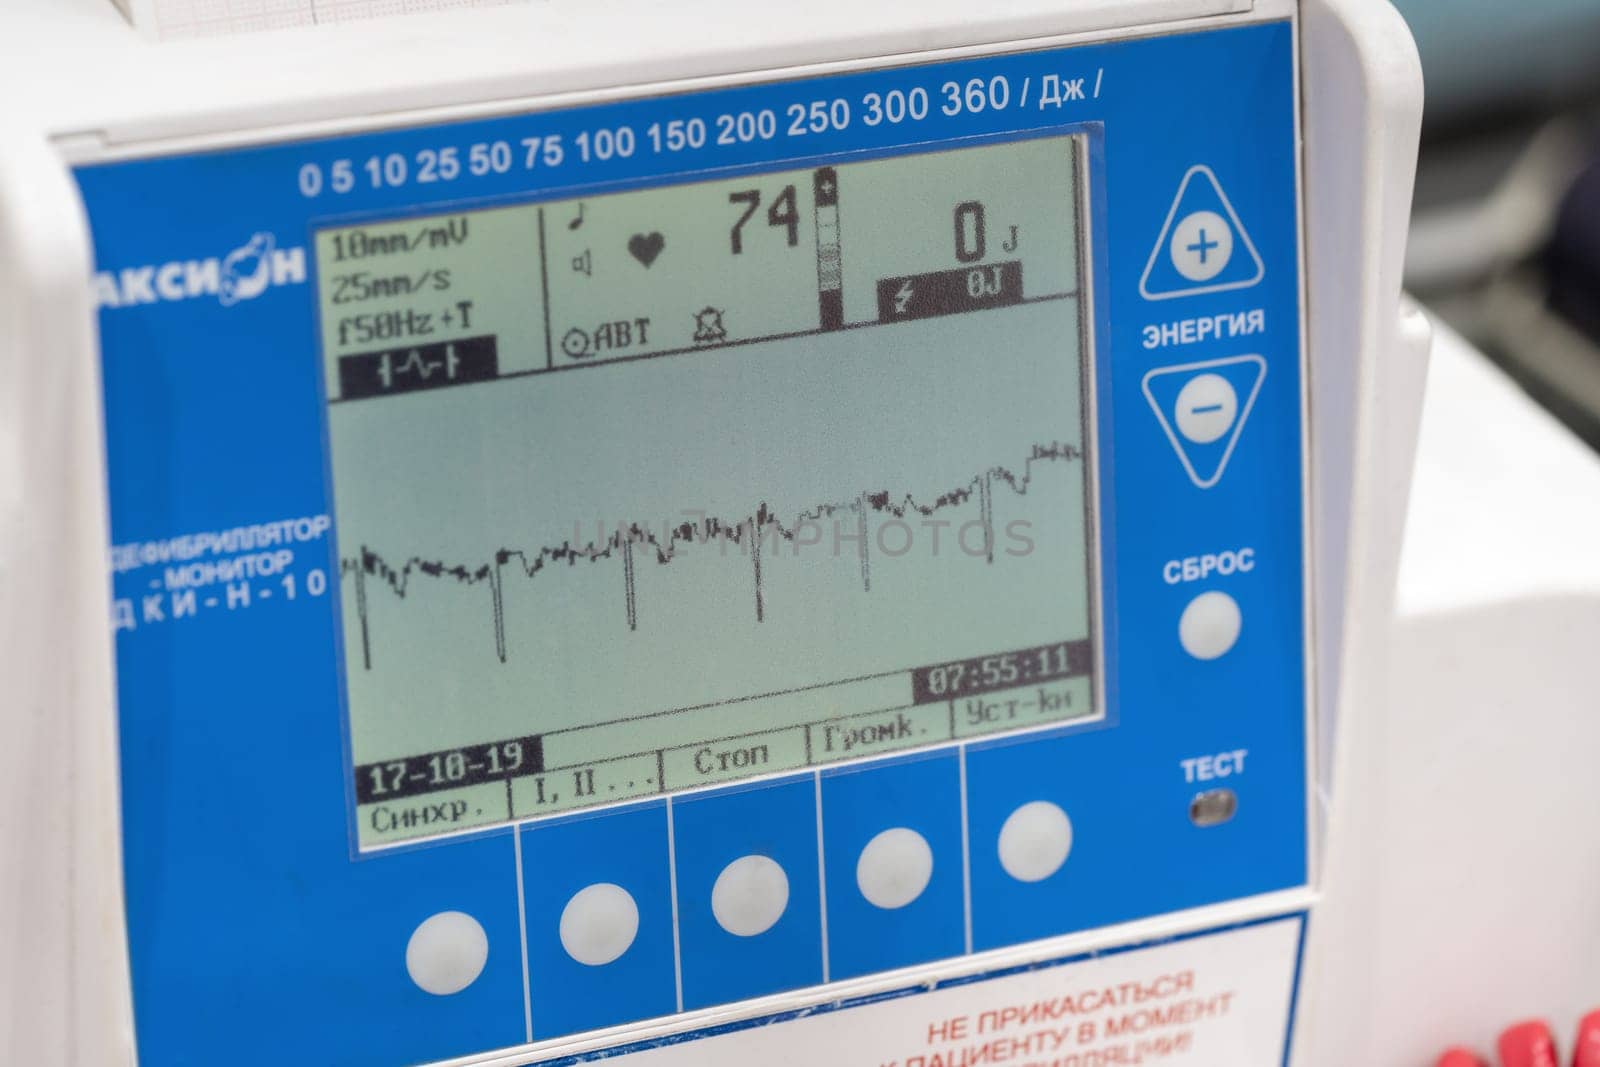 Close-up view Russian defibrillator monitor Axion DKI-N-10 for life-threatening cardiac dysrhythmias, ventricular fibrillation, non-perfusing ventricular tachycardia by Alexander-Piragis